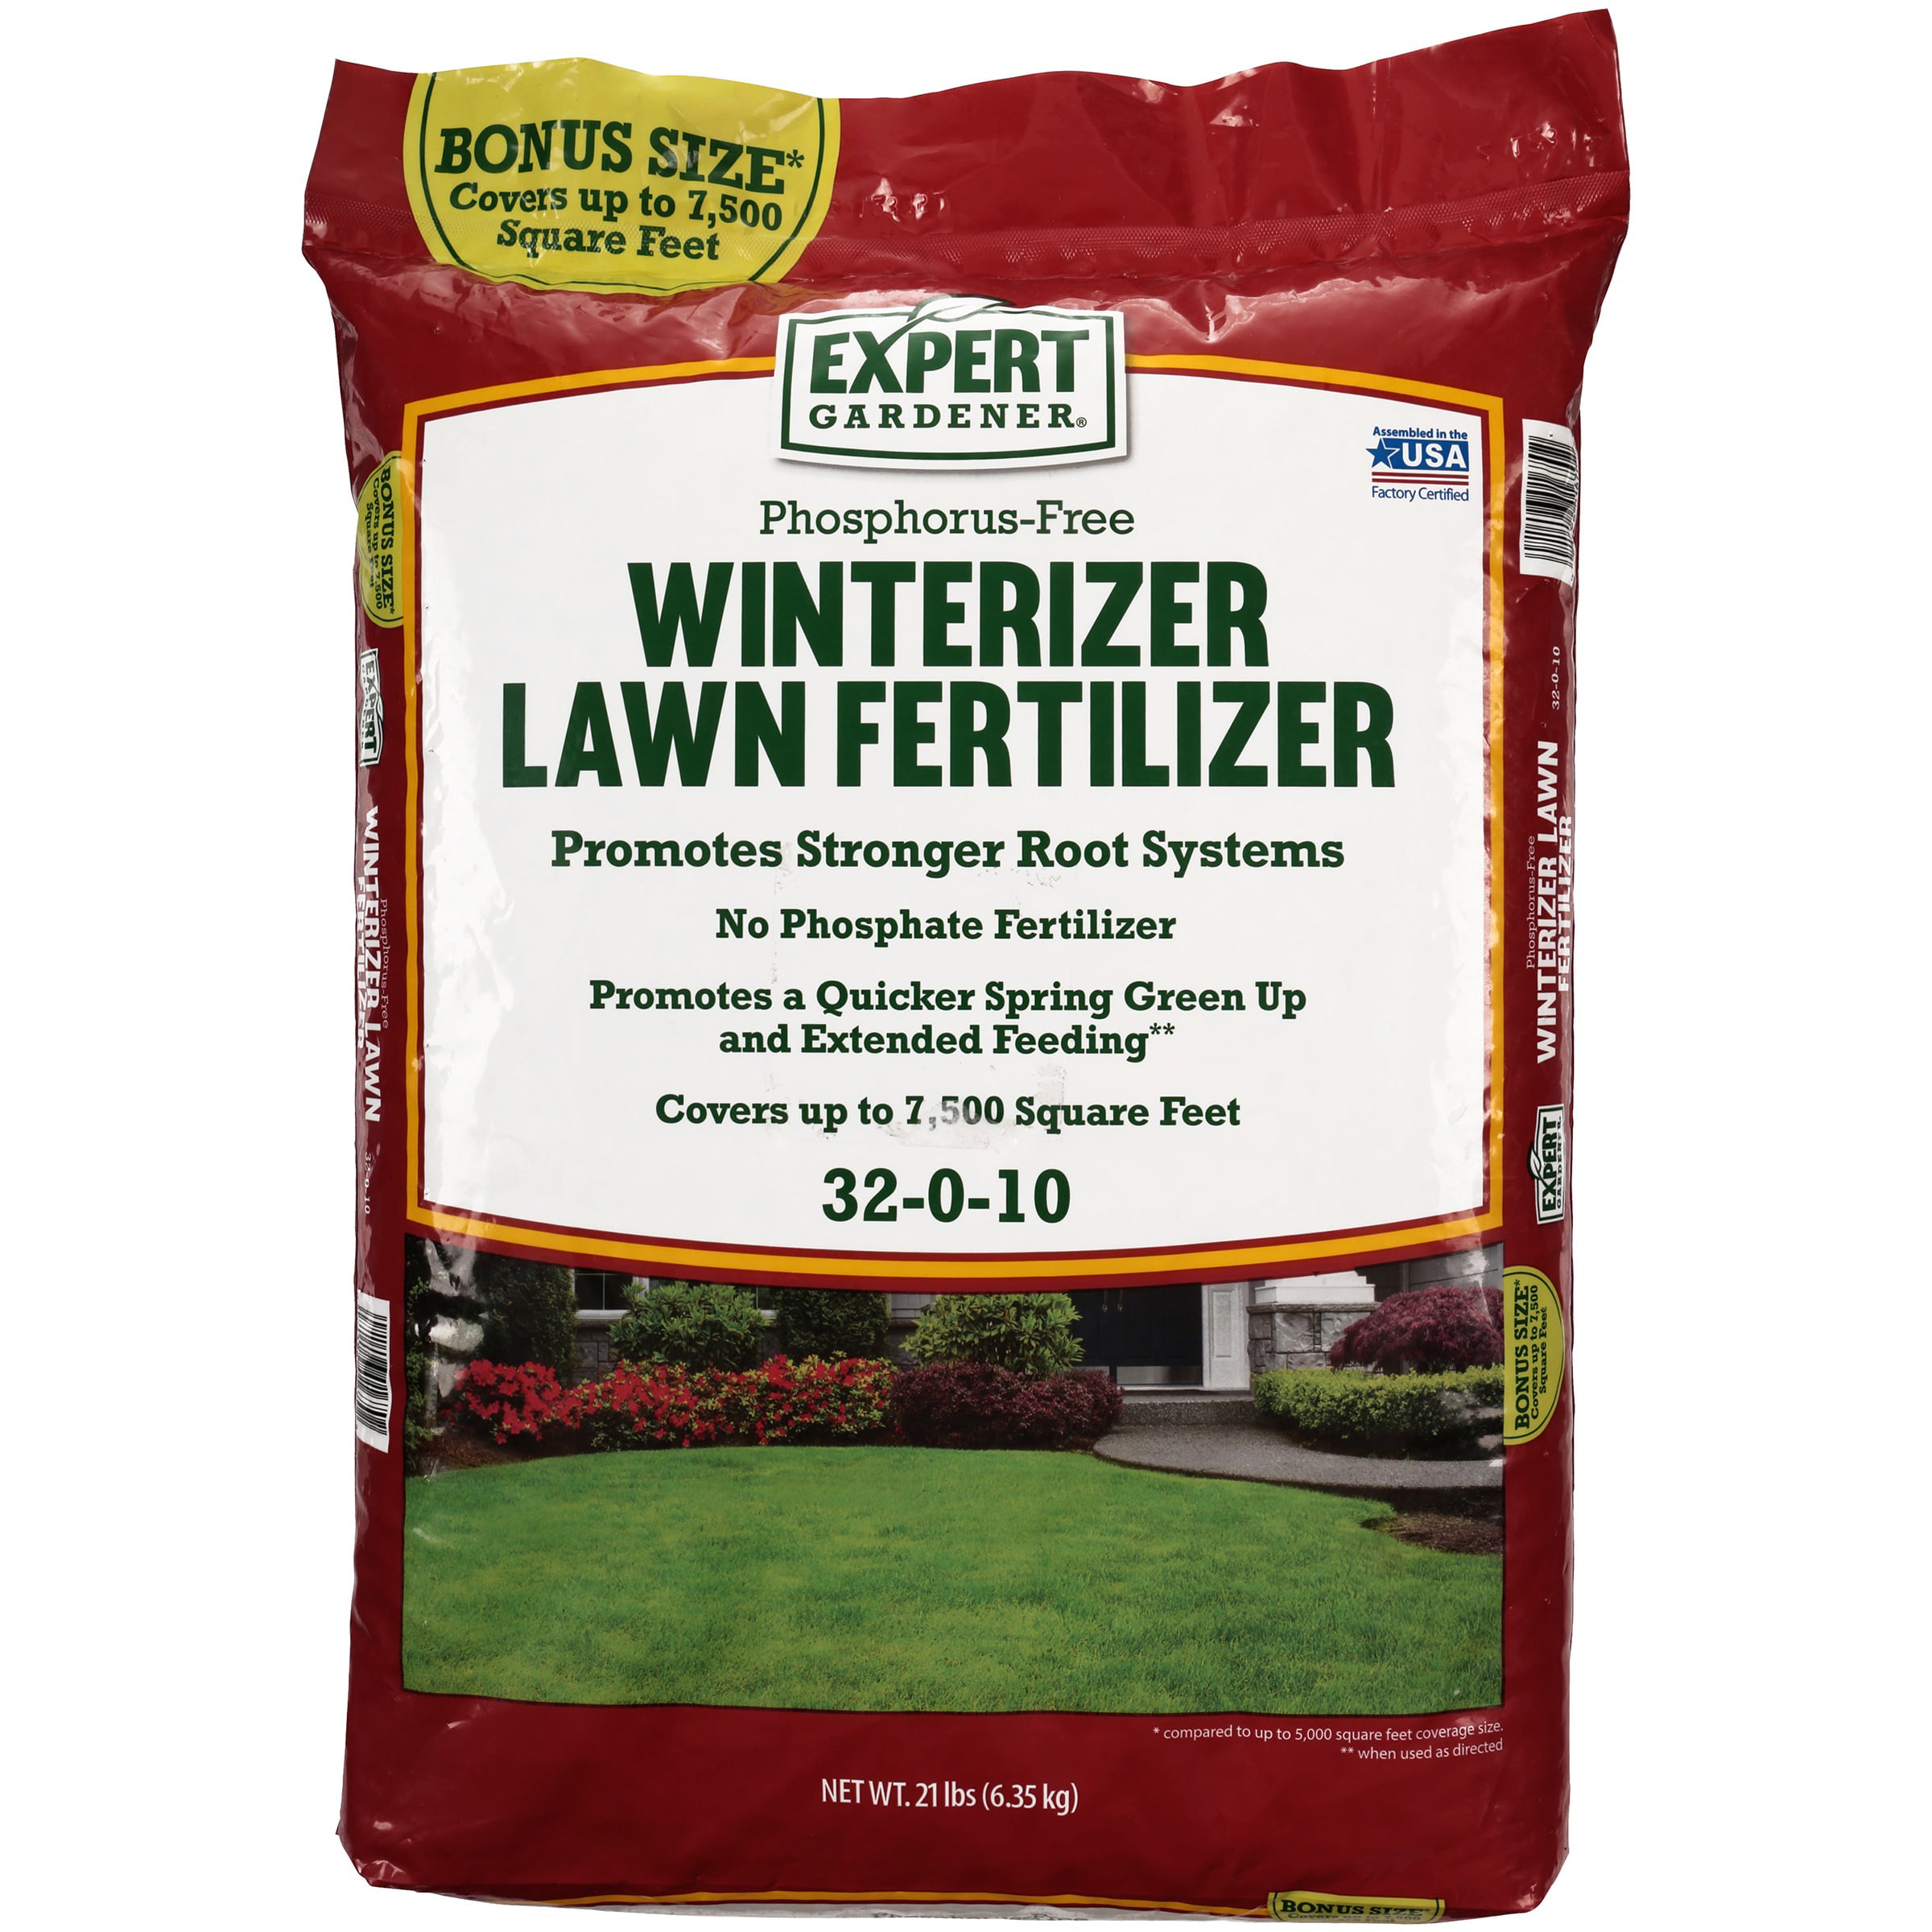 When To Apply Winterizer Fertilizer